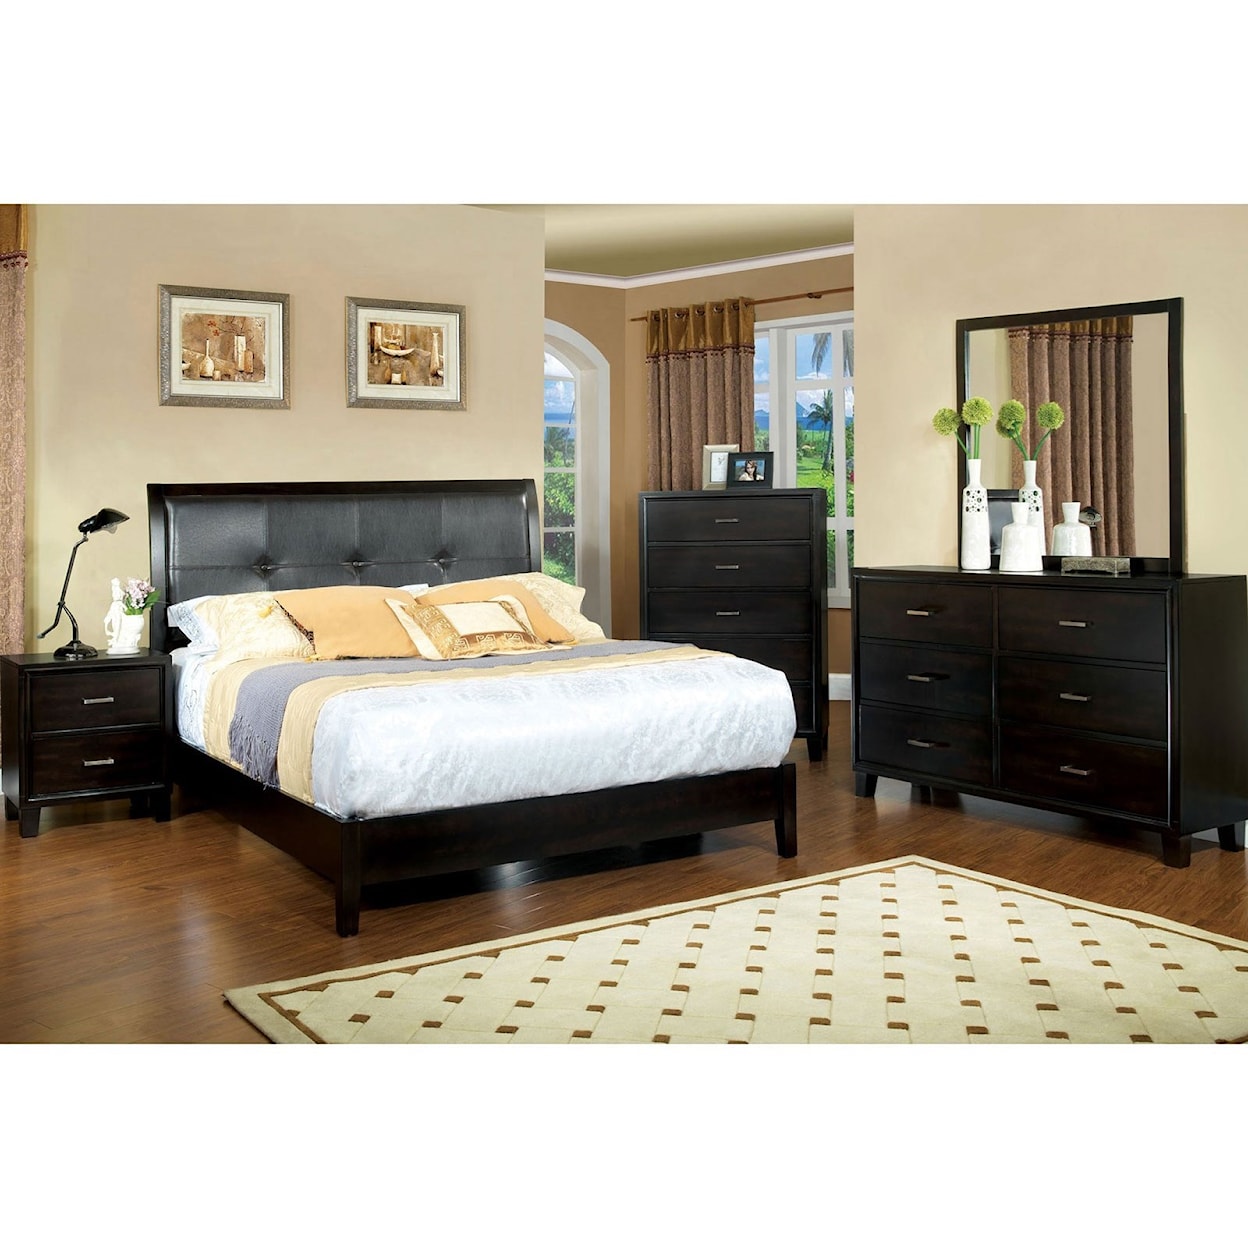 Furniture of America Enrico Queen Bedroom Group